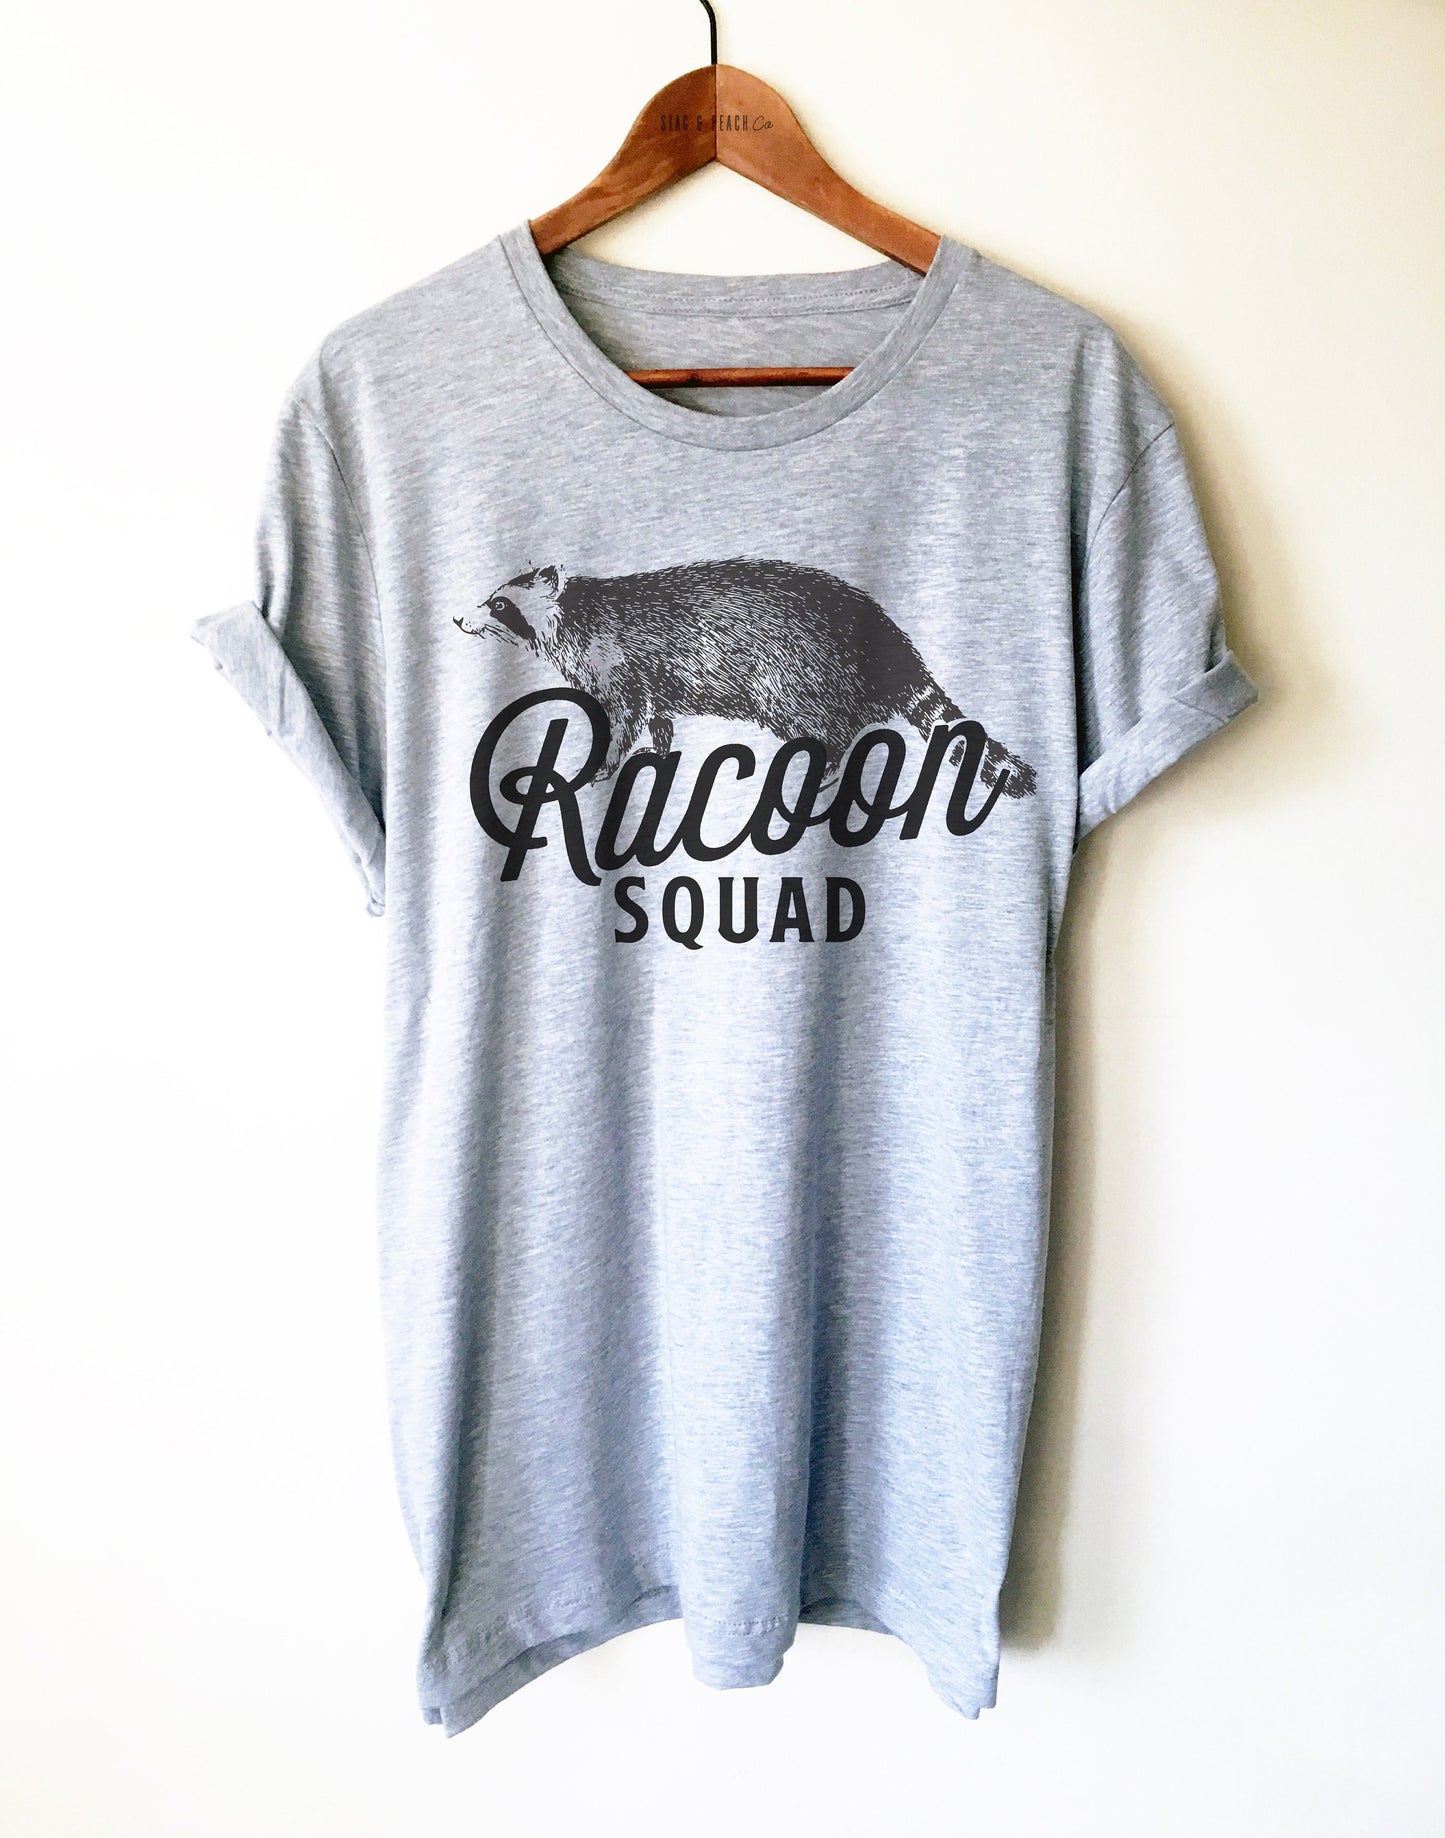 Raccoon Squad Unisex Shirt - Raccoon Lover Gift, Trash Panda T-Shirt, Funny Raccoon Tee, Raccoon Rescue Squad, Wildlife Rescue Team,